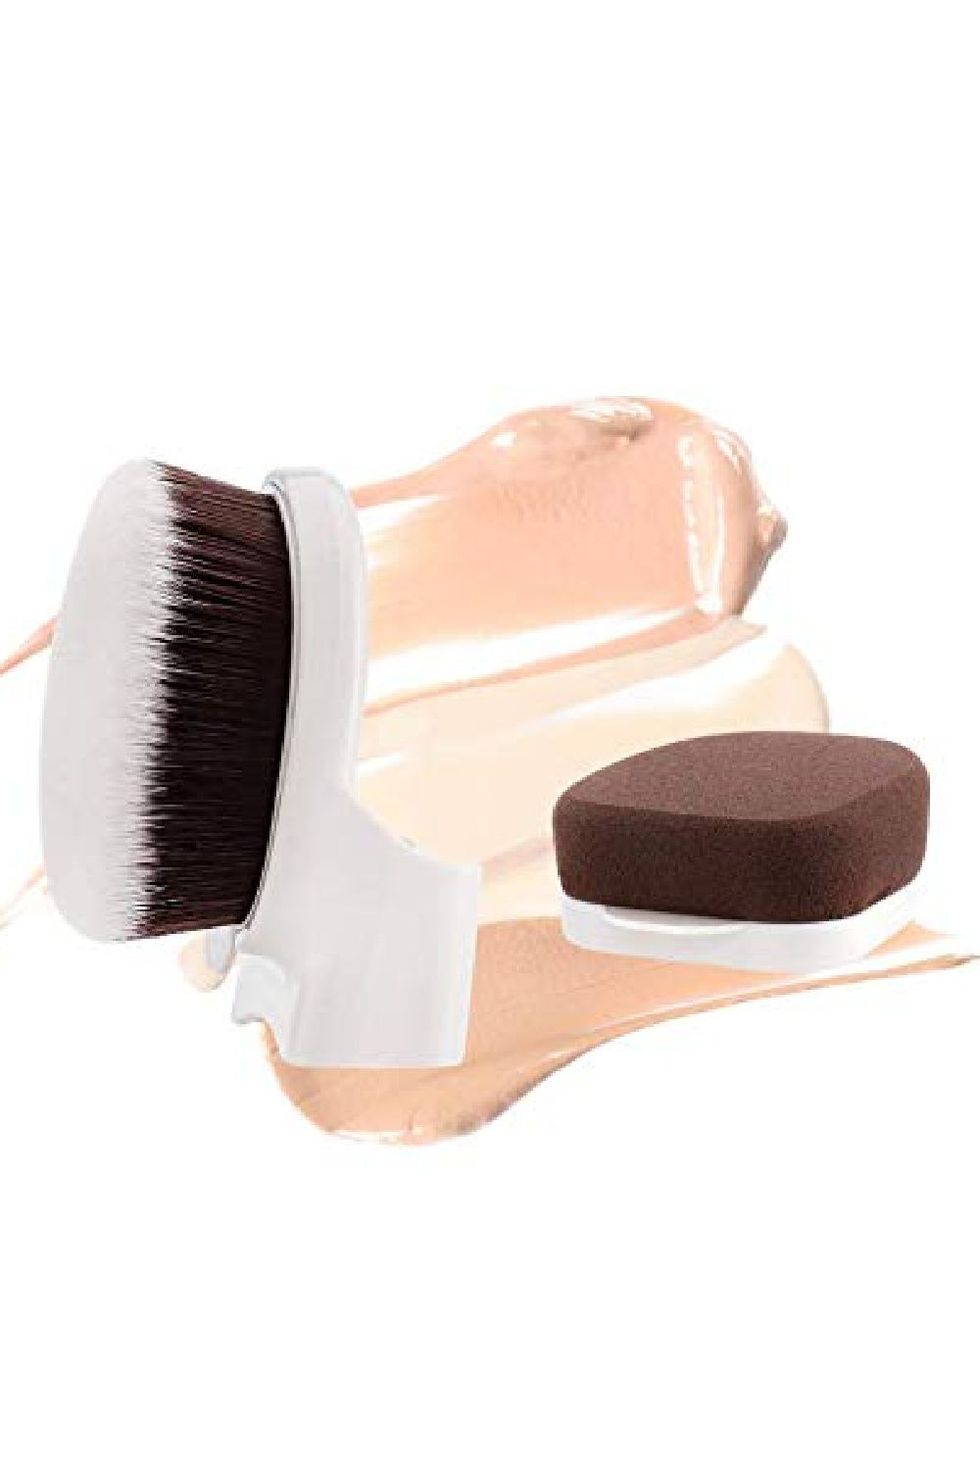 Yubi Beauty Makeup Brush and Cosmetic Sponge Duo